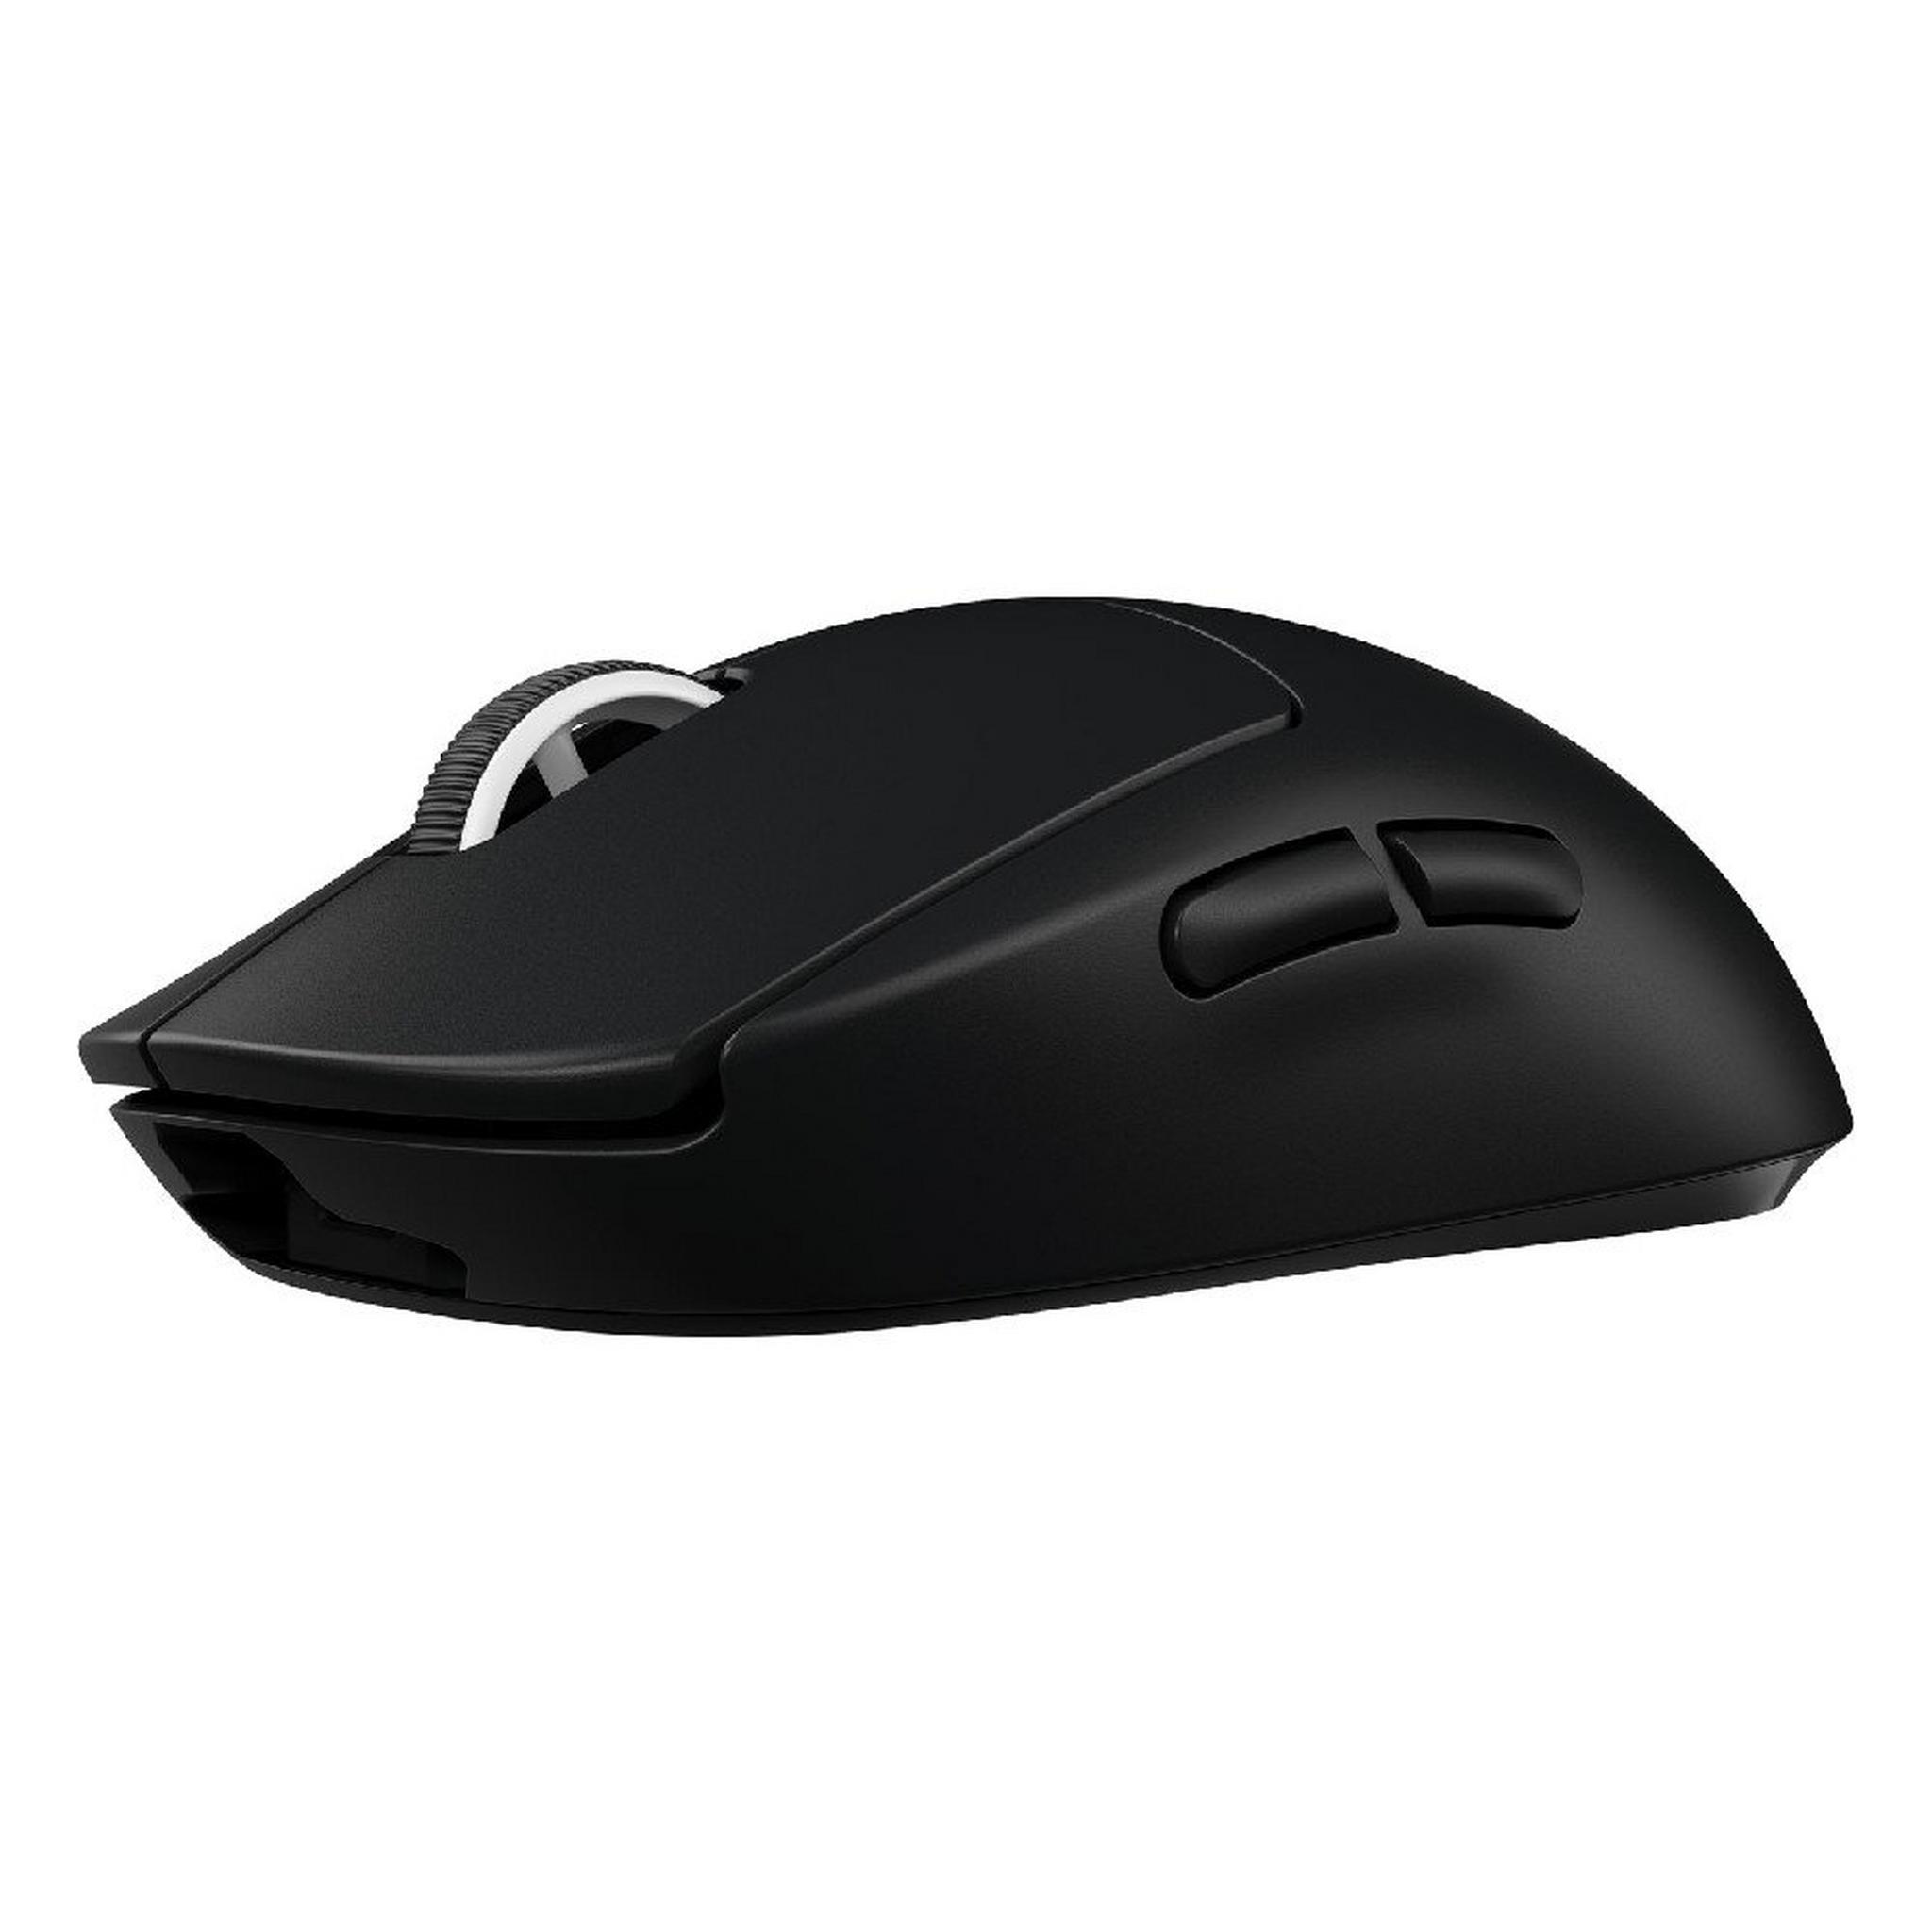 Logitech Pro X SuperLight Wireless Mouse - Black